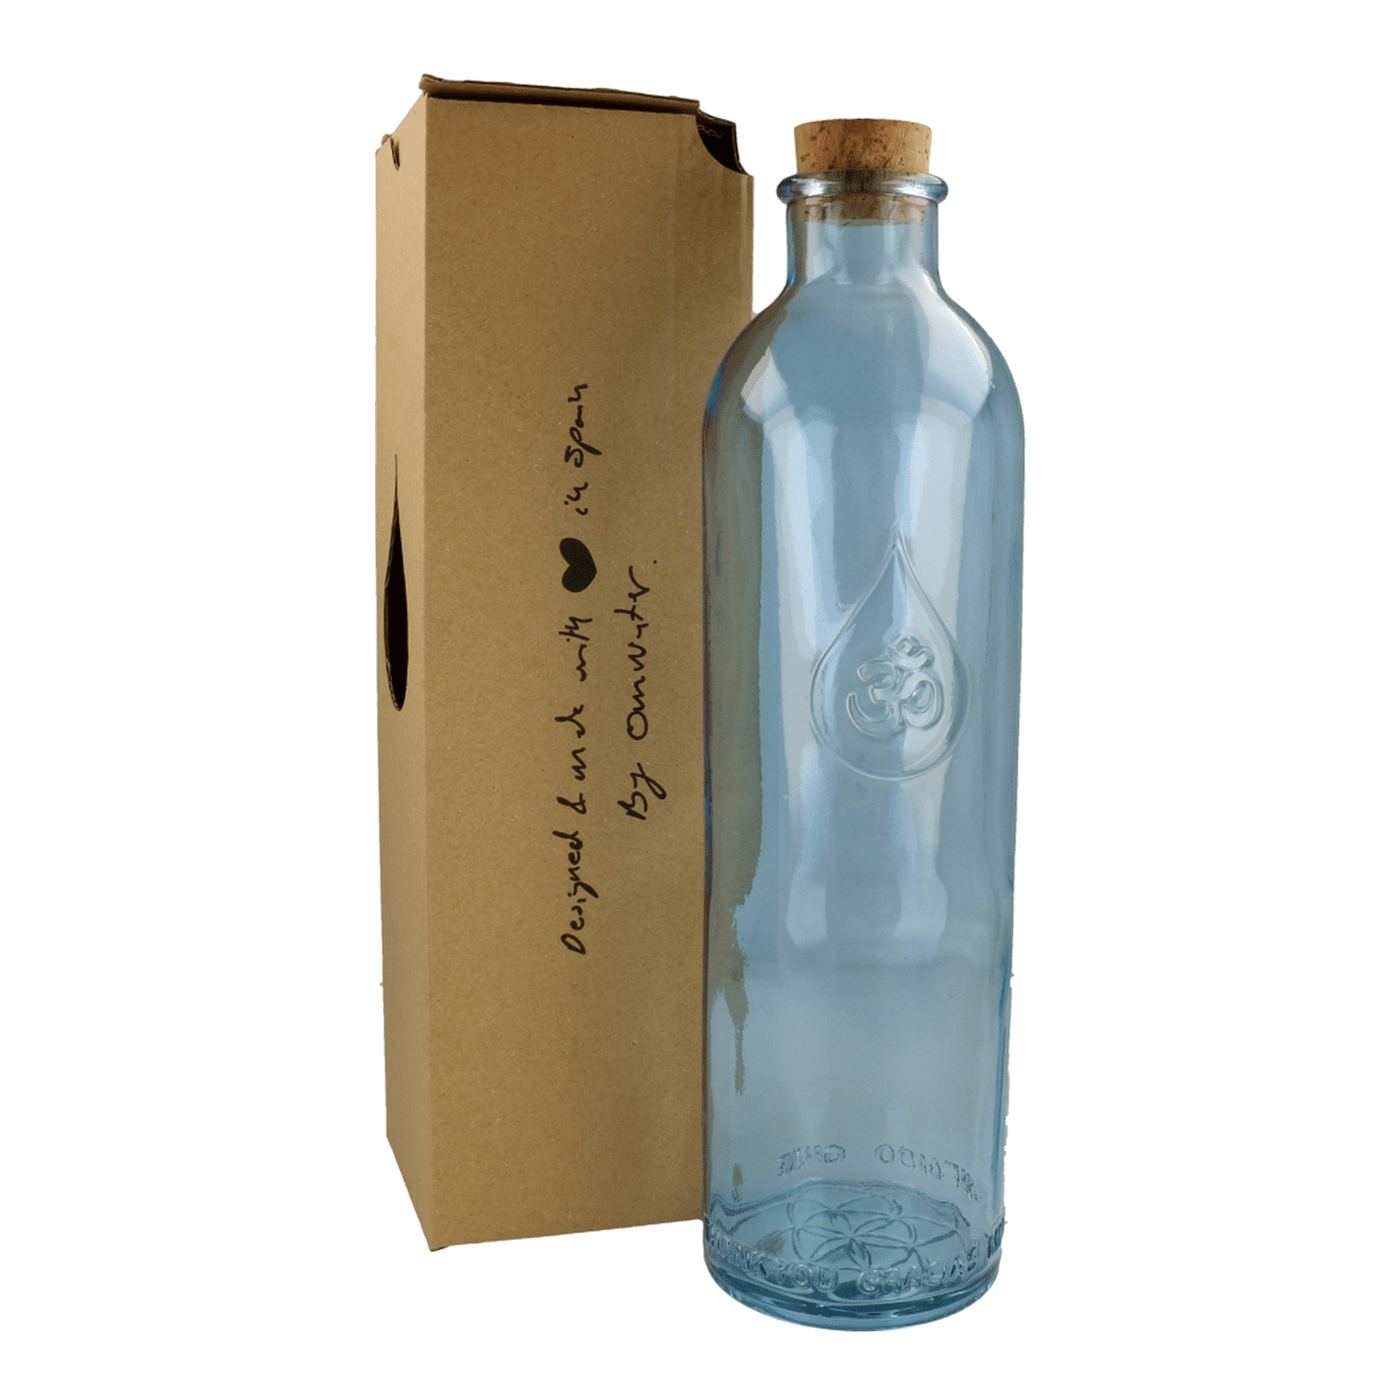 Botella para Liquido 1 lts, comprá online